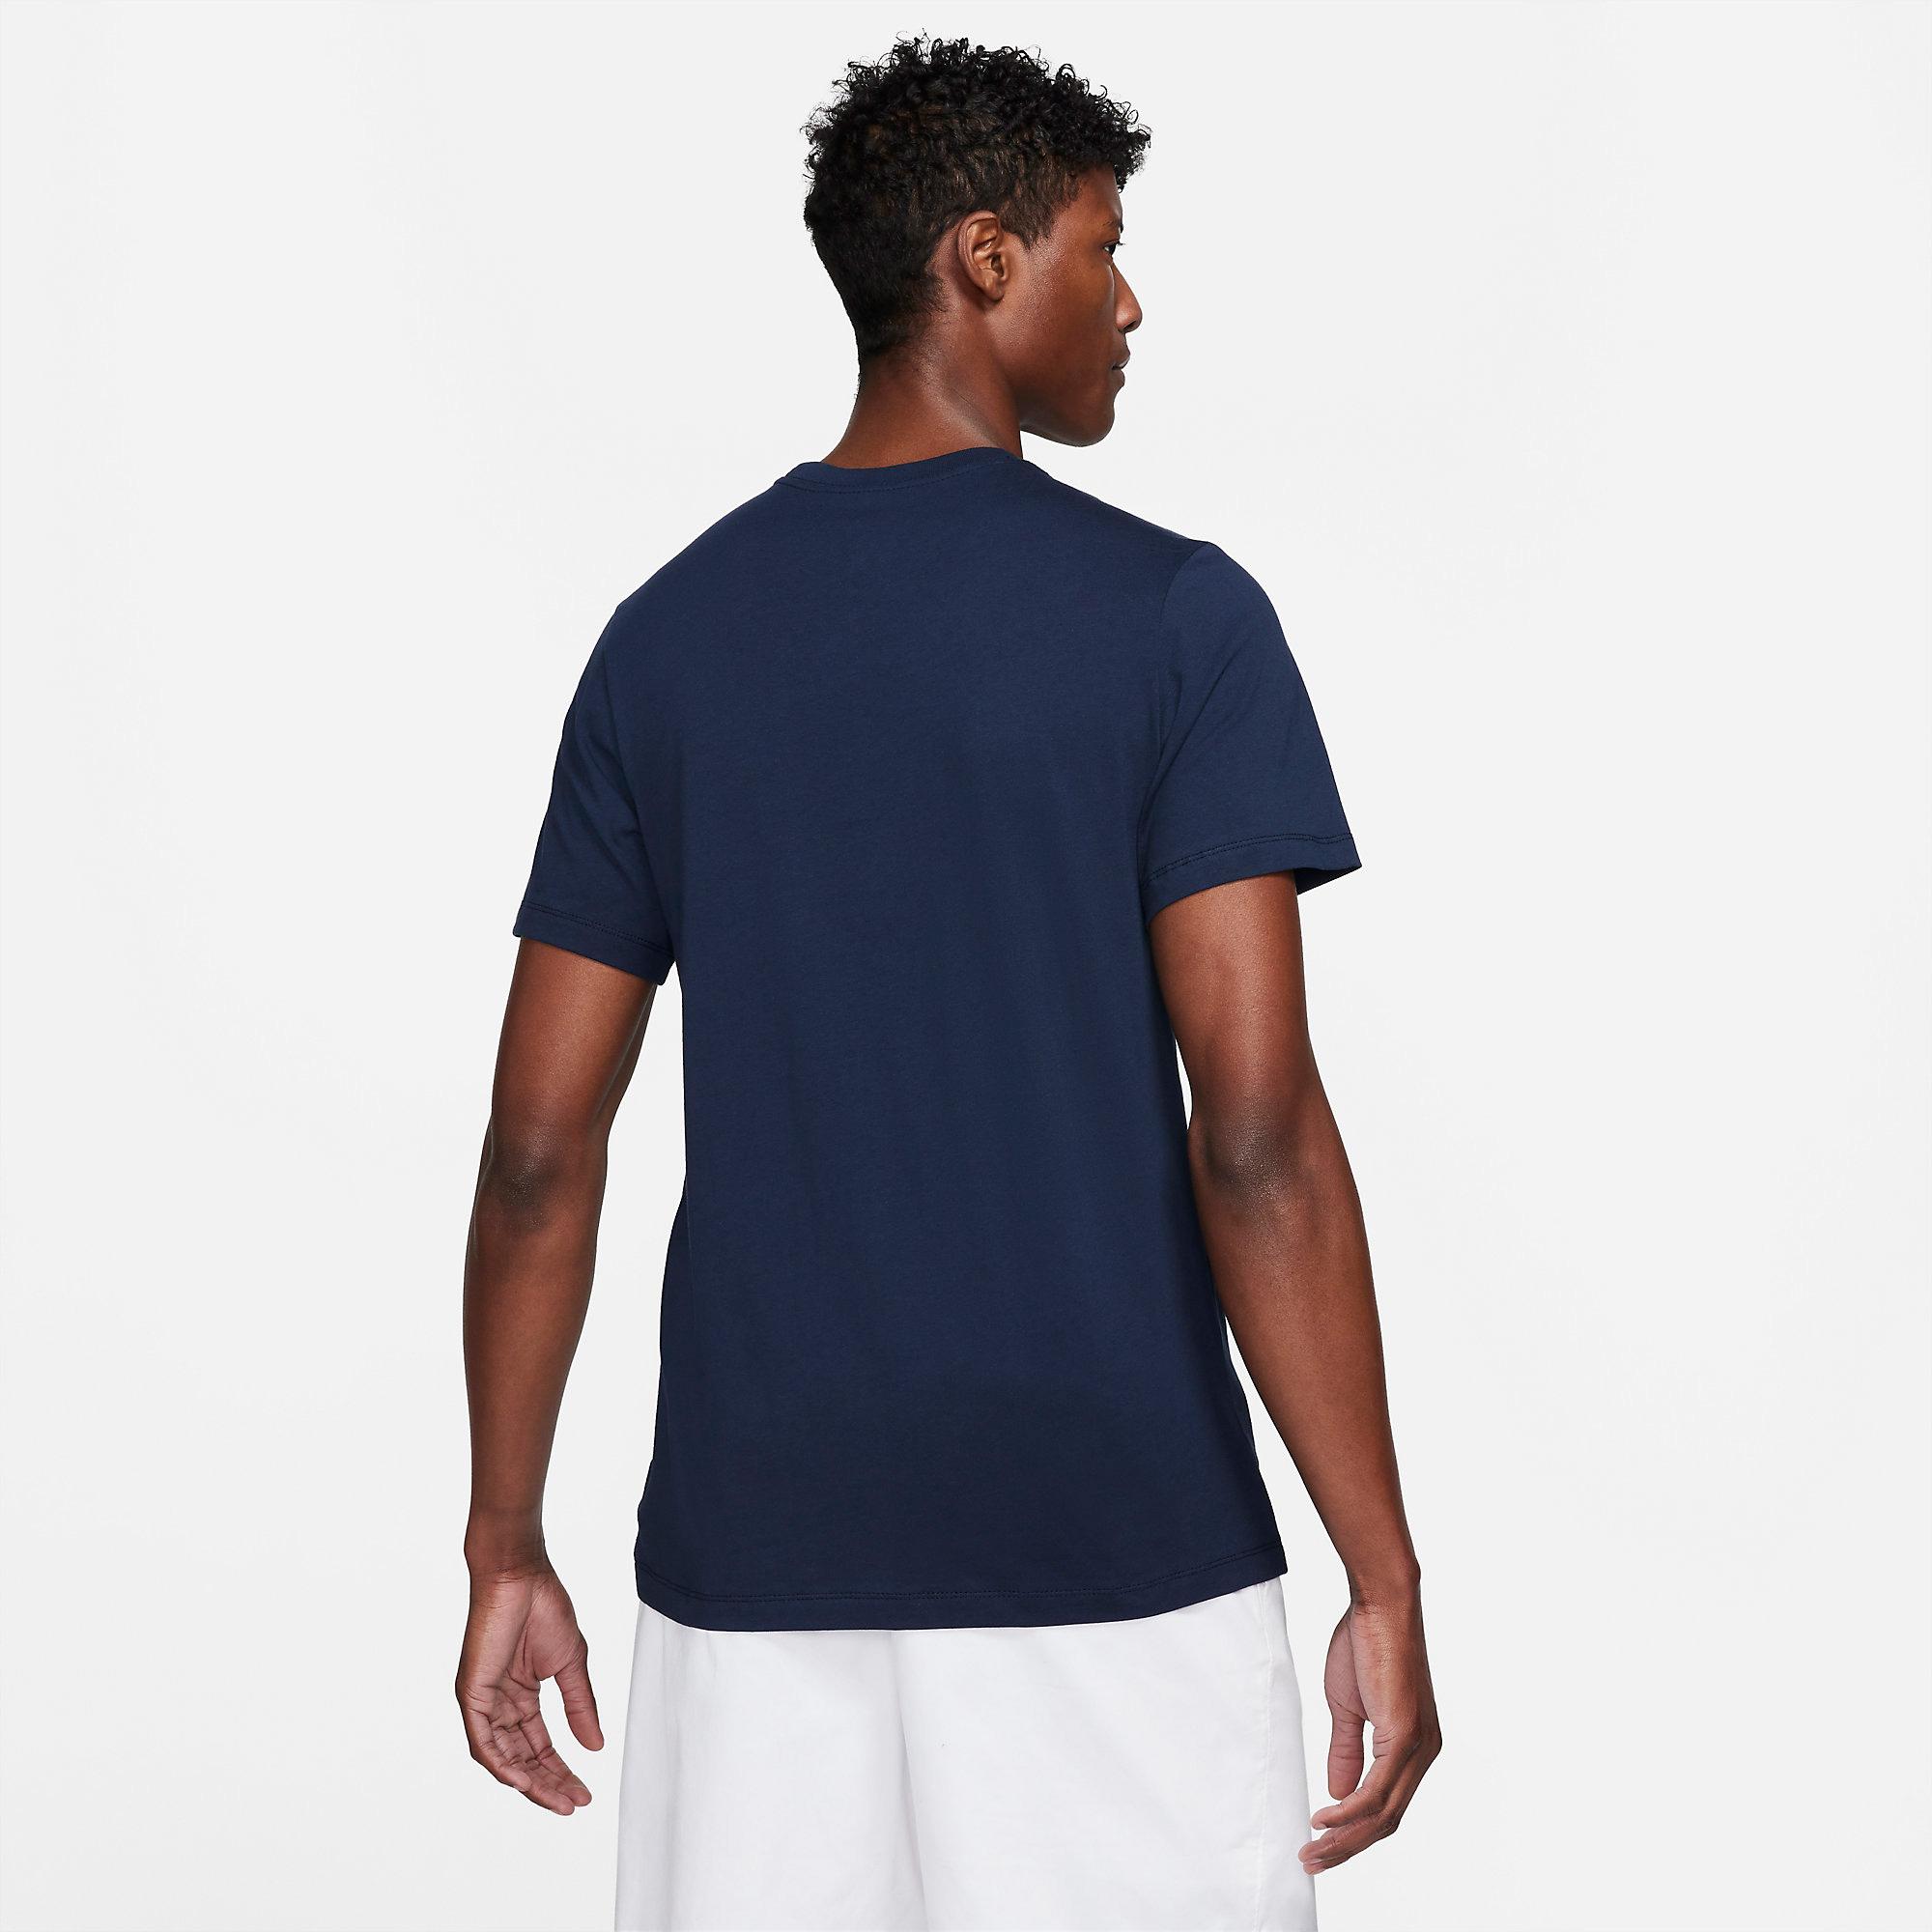 Nike Mens Tennis Tee - Navy Blue - Tennisnuts.com